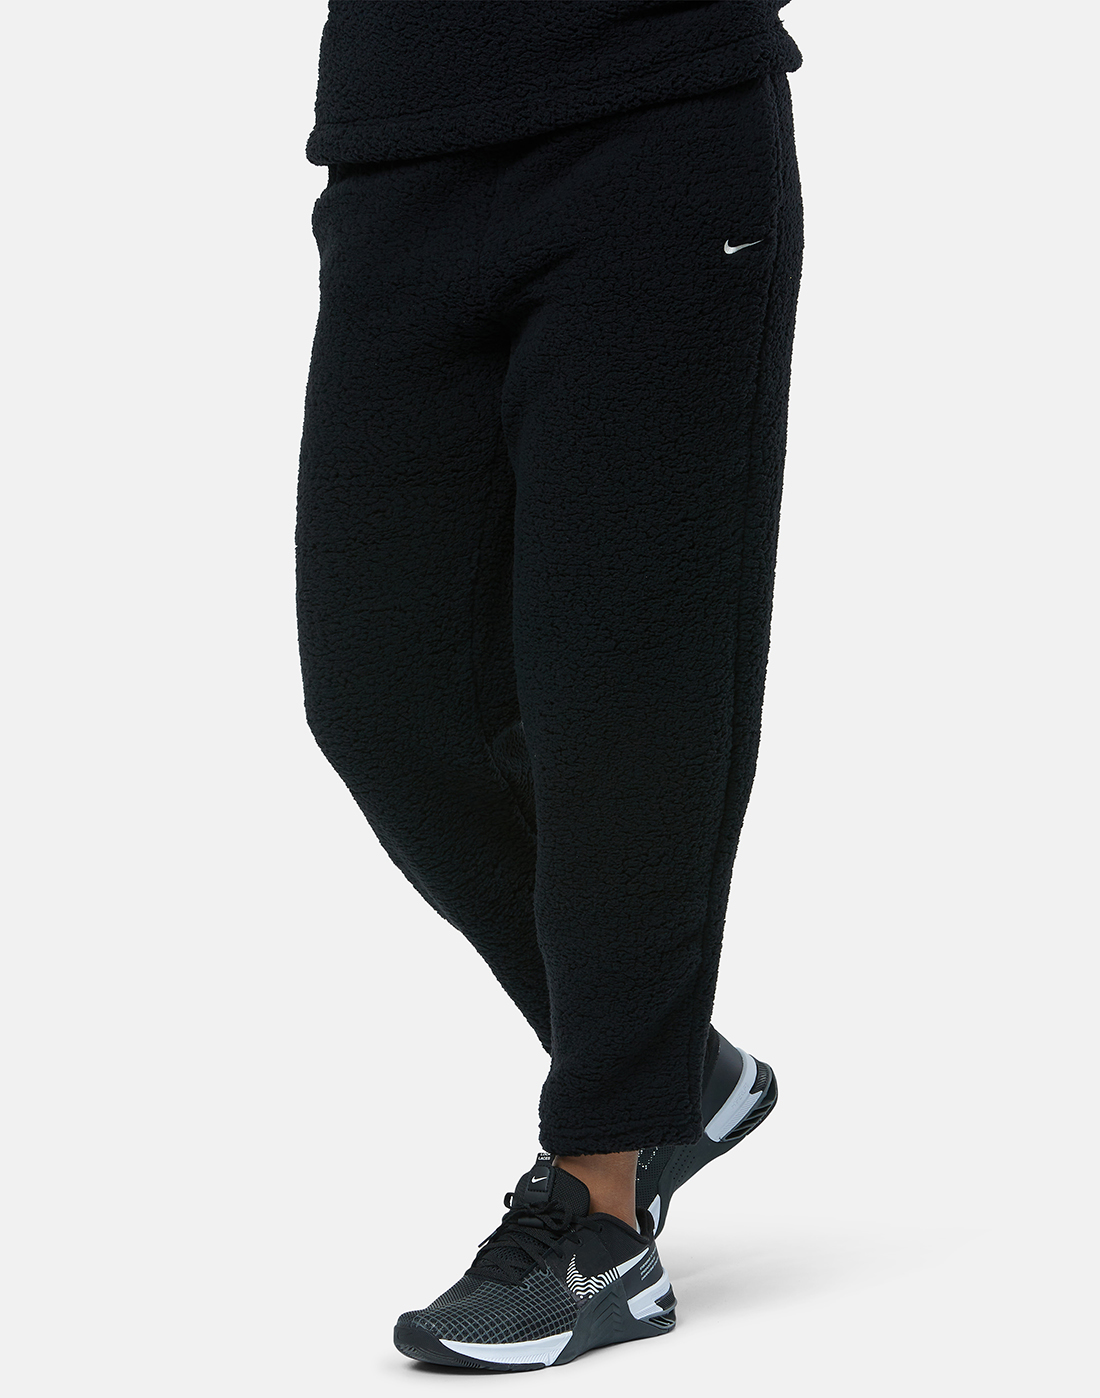  Nike Women's Bliss Victory Training Pants - Medium Size Black,  White : Clothing, Shoes & Jewelry